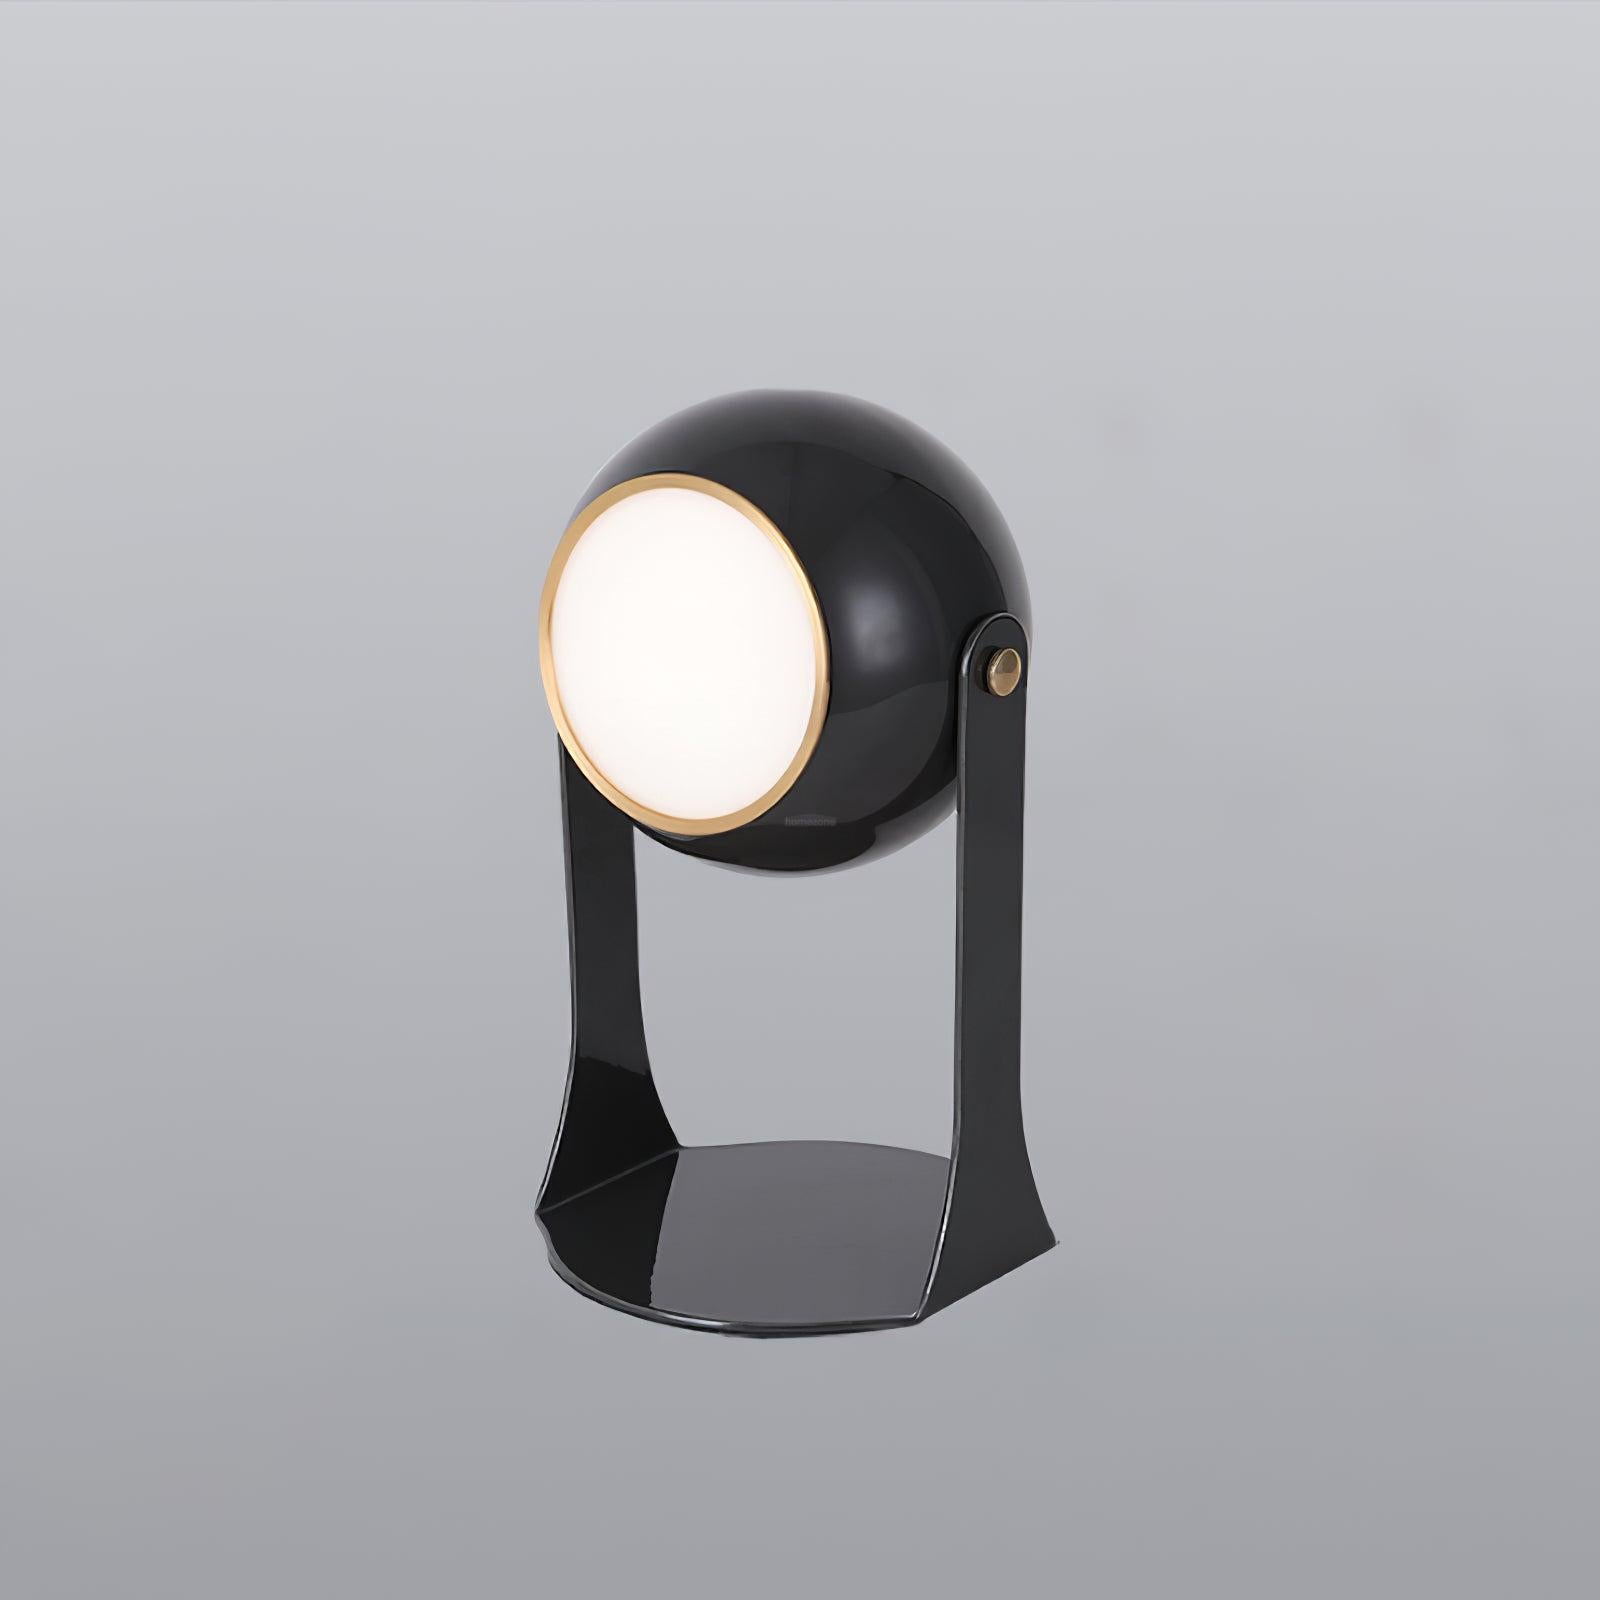 Svejk Built-in Battery Table Lamp  ∅ 3.9″